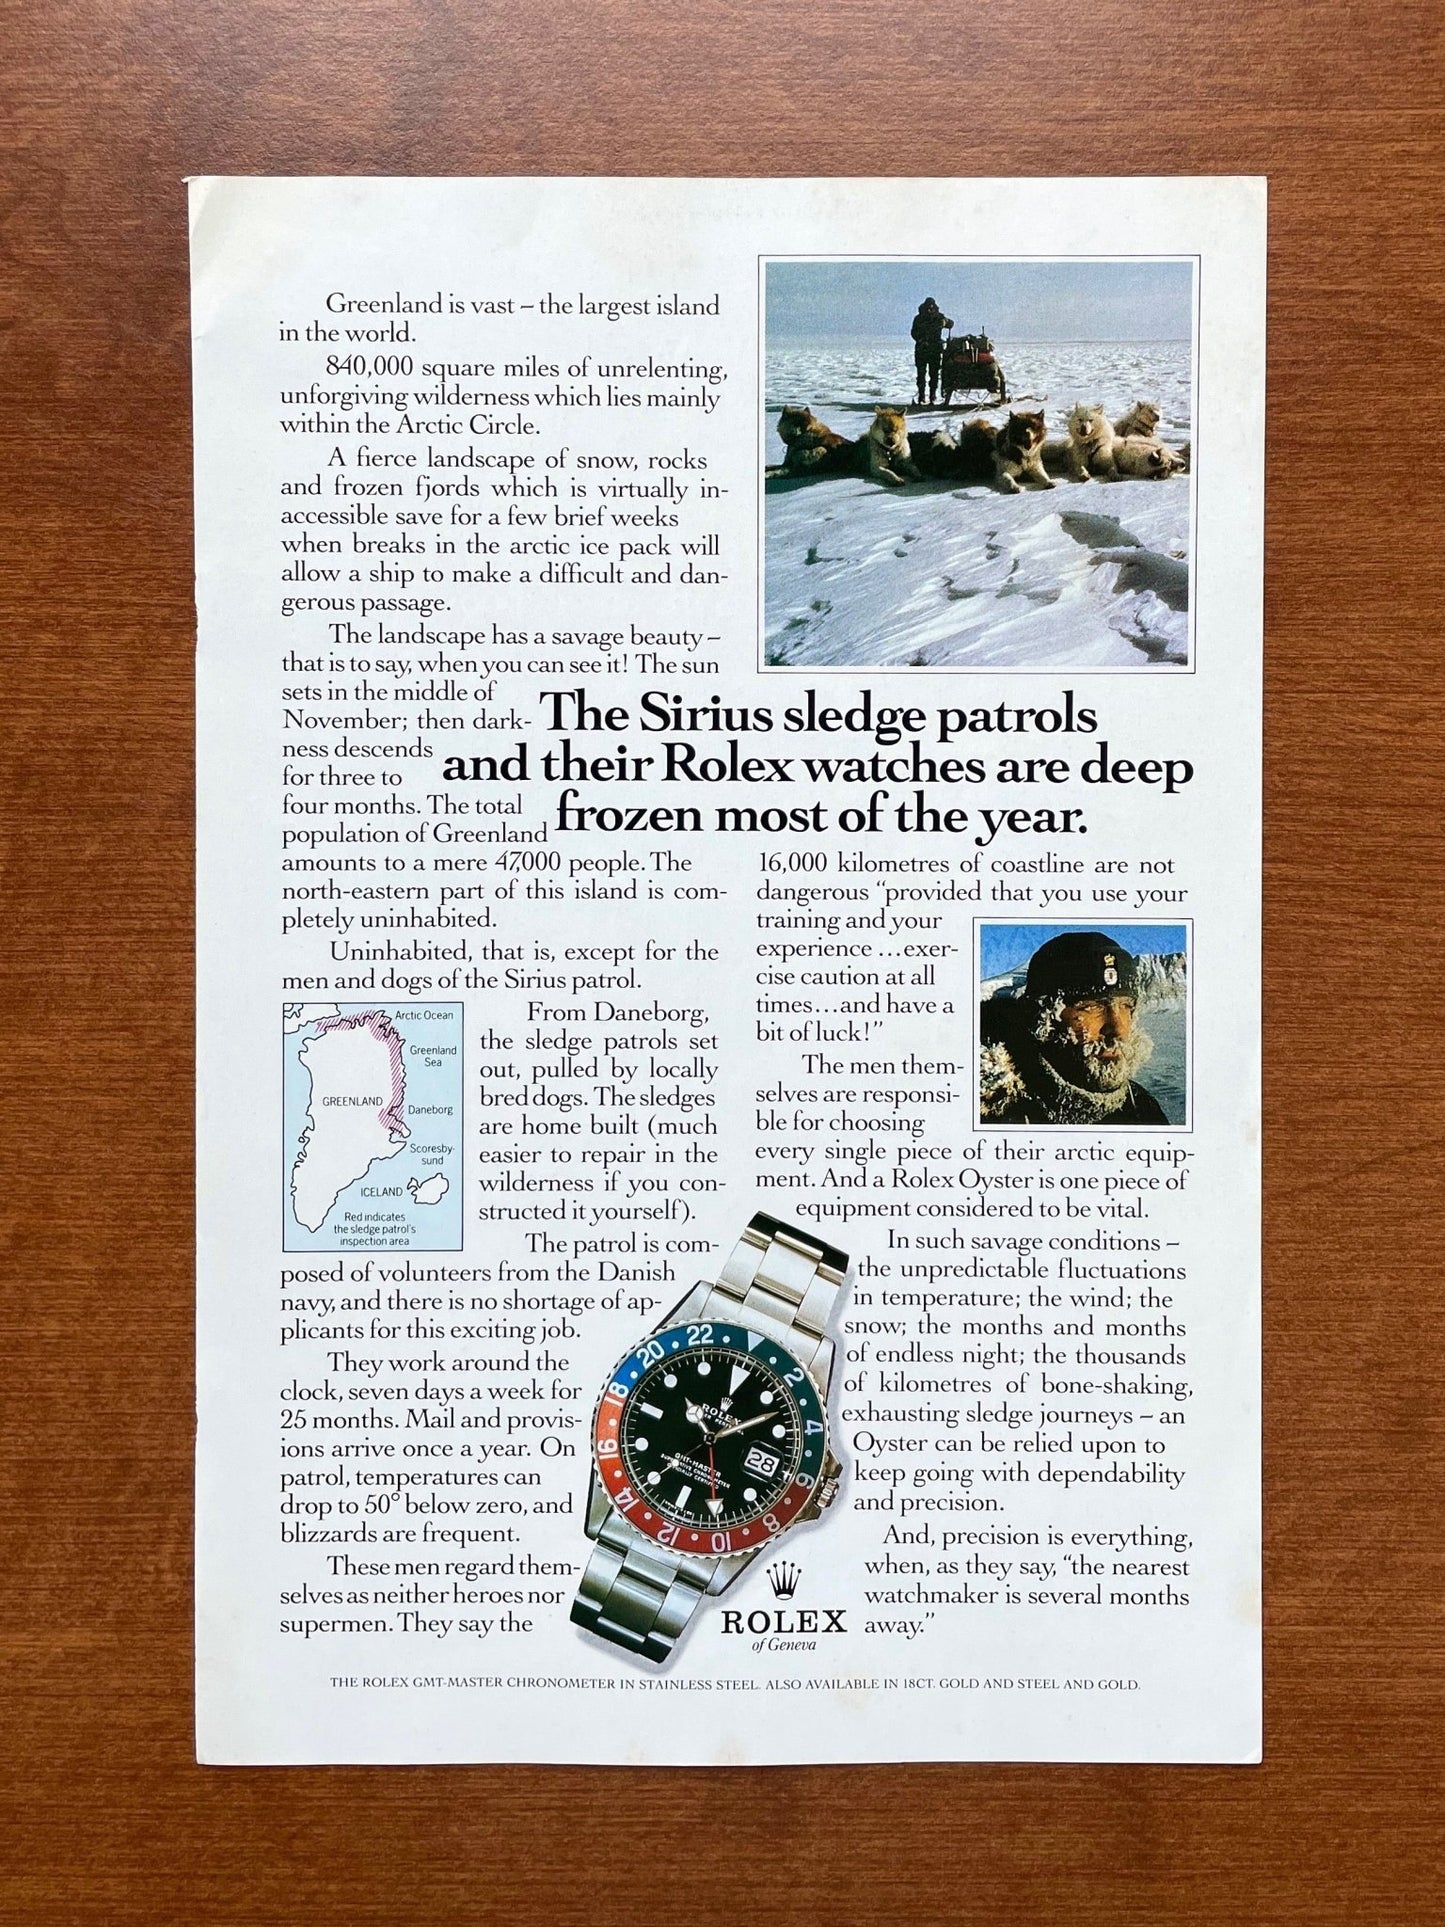 1983 Rolex GMT Master "The Sirius sledge patrols..." Advertisement